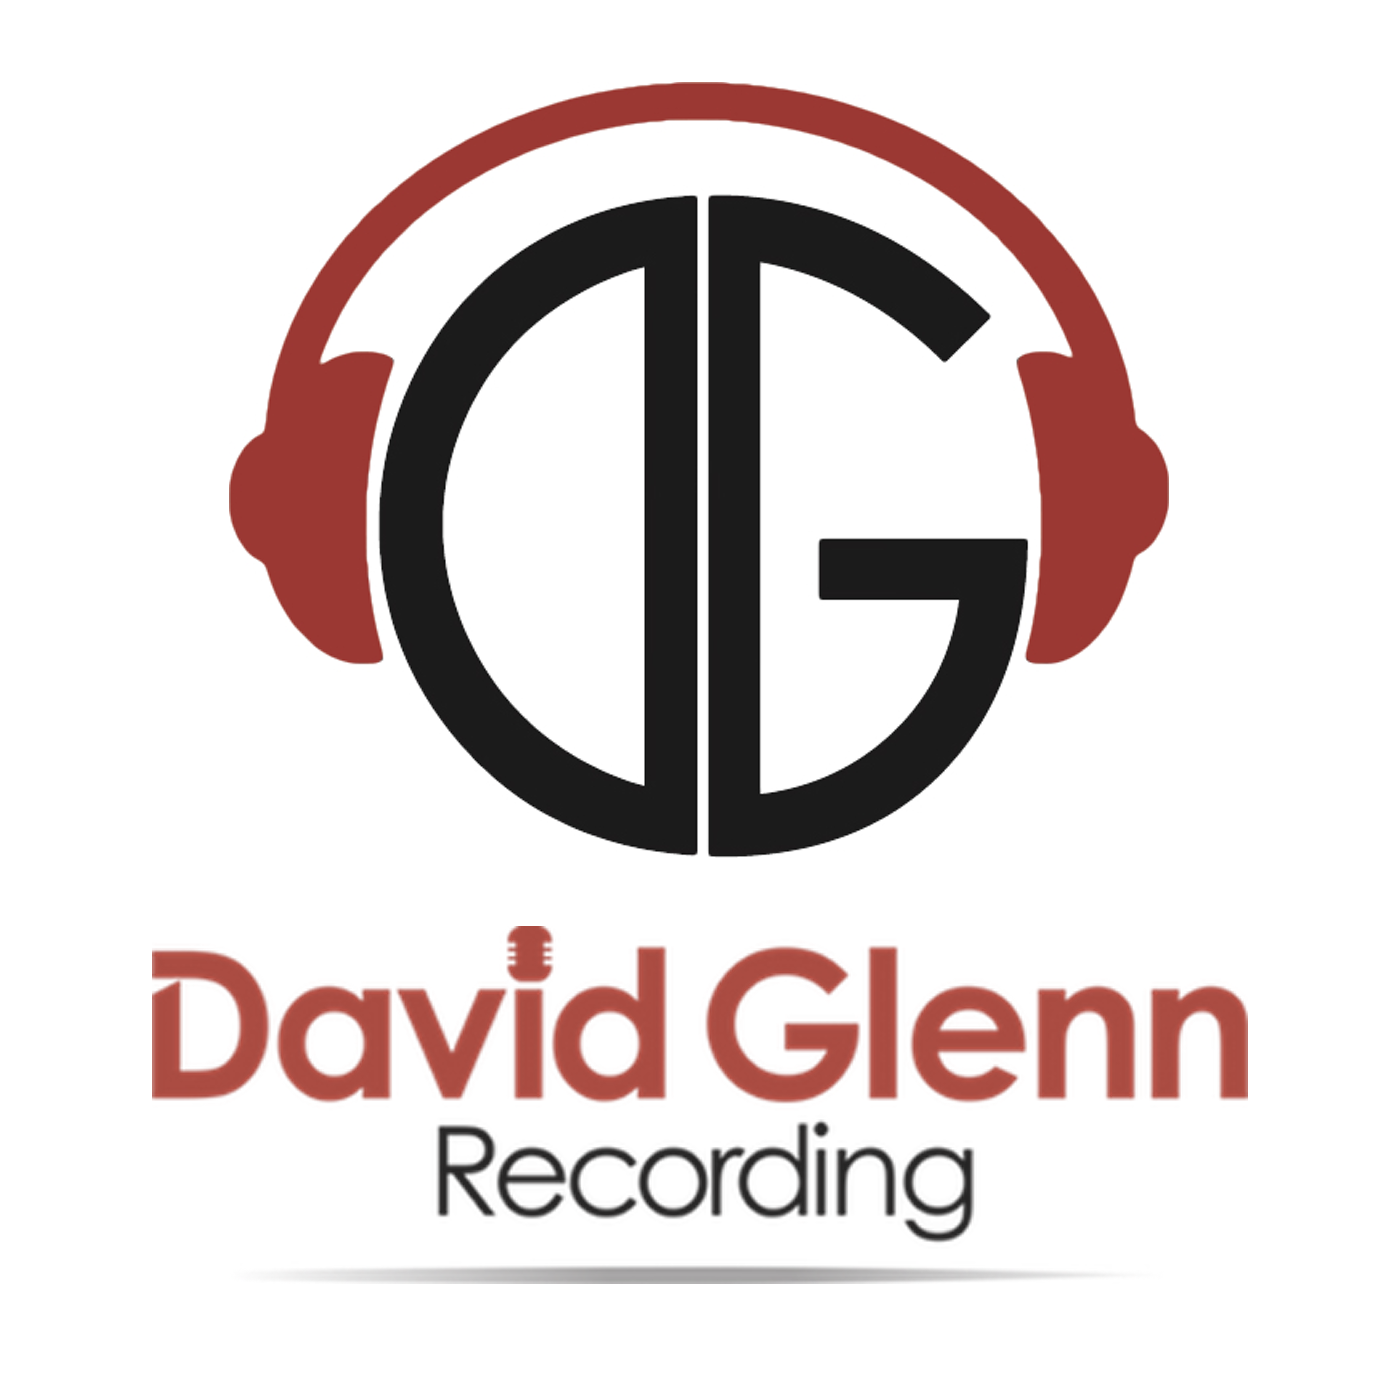 Ask David Glenn